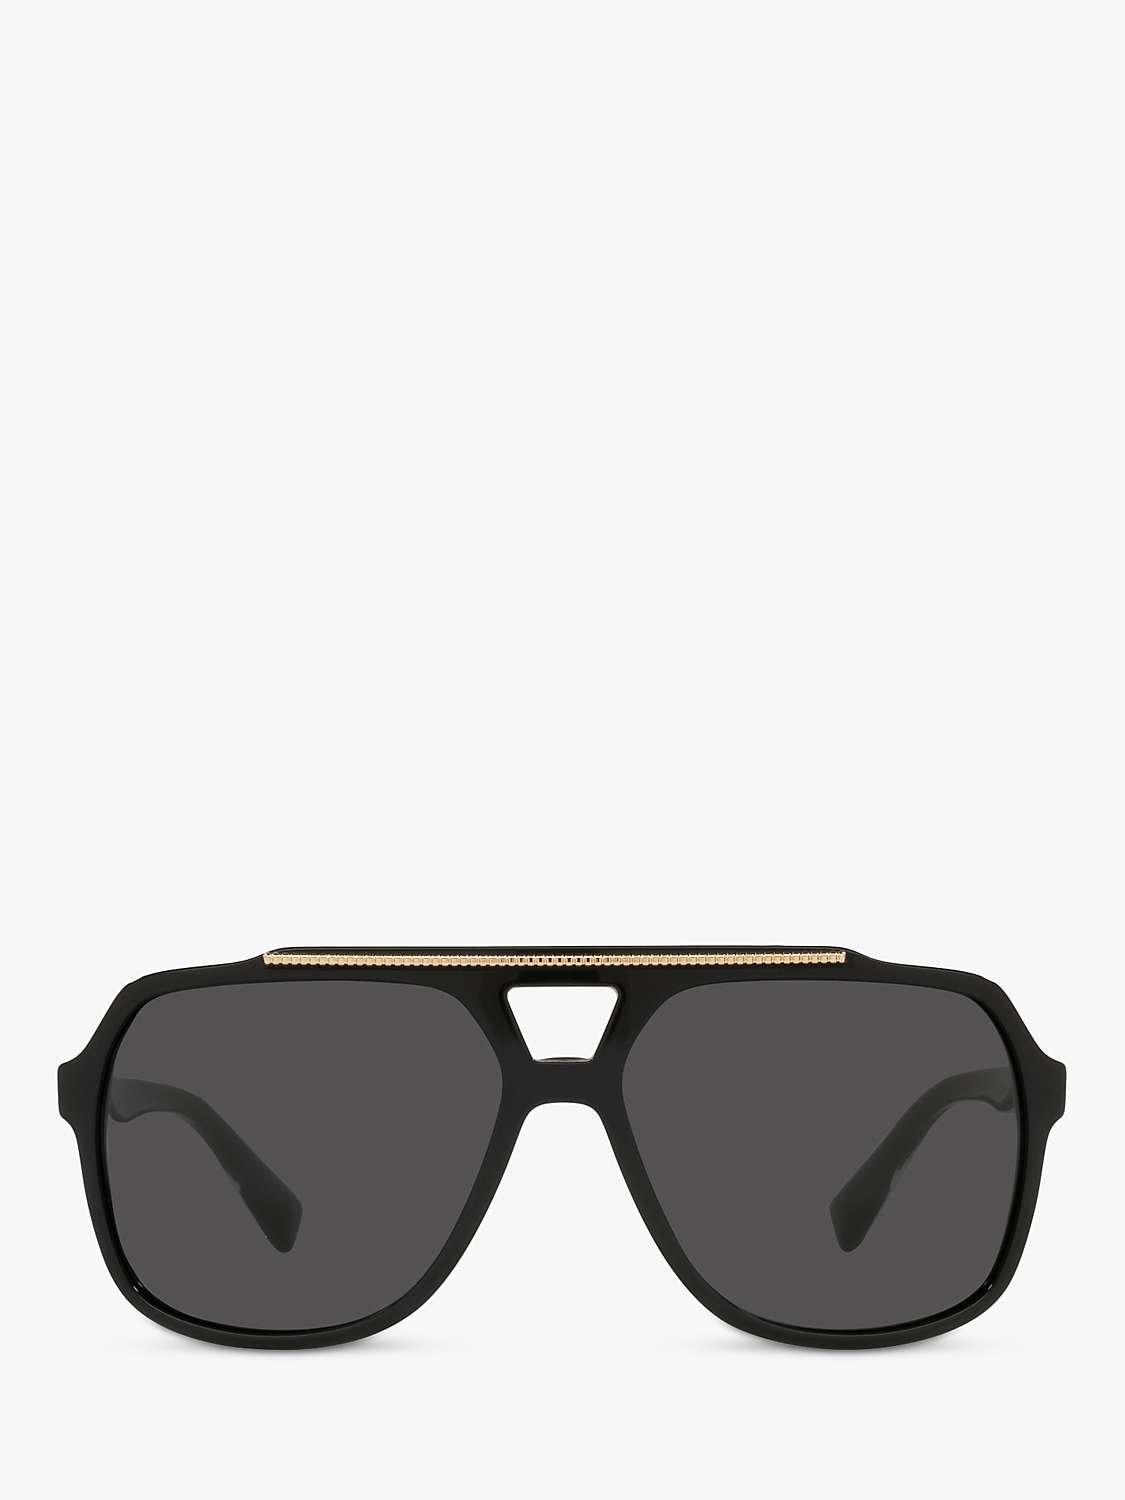 Dolce & Gabbana DG4388 Men's Aviator Sunglasses, Black/Grey at John ...